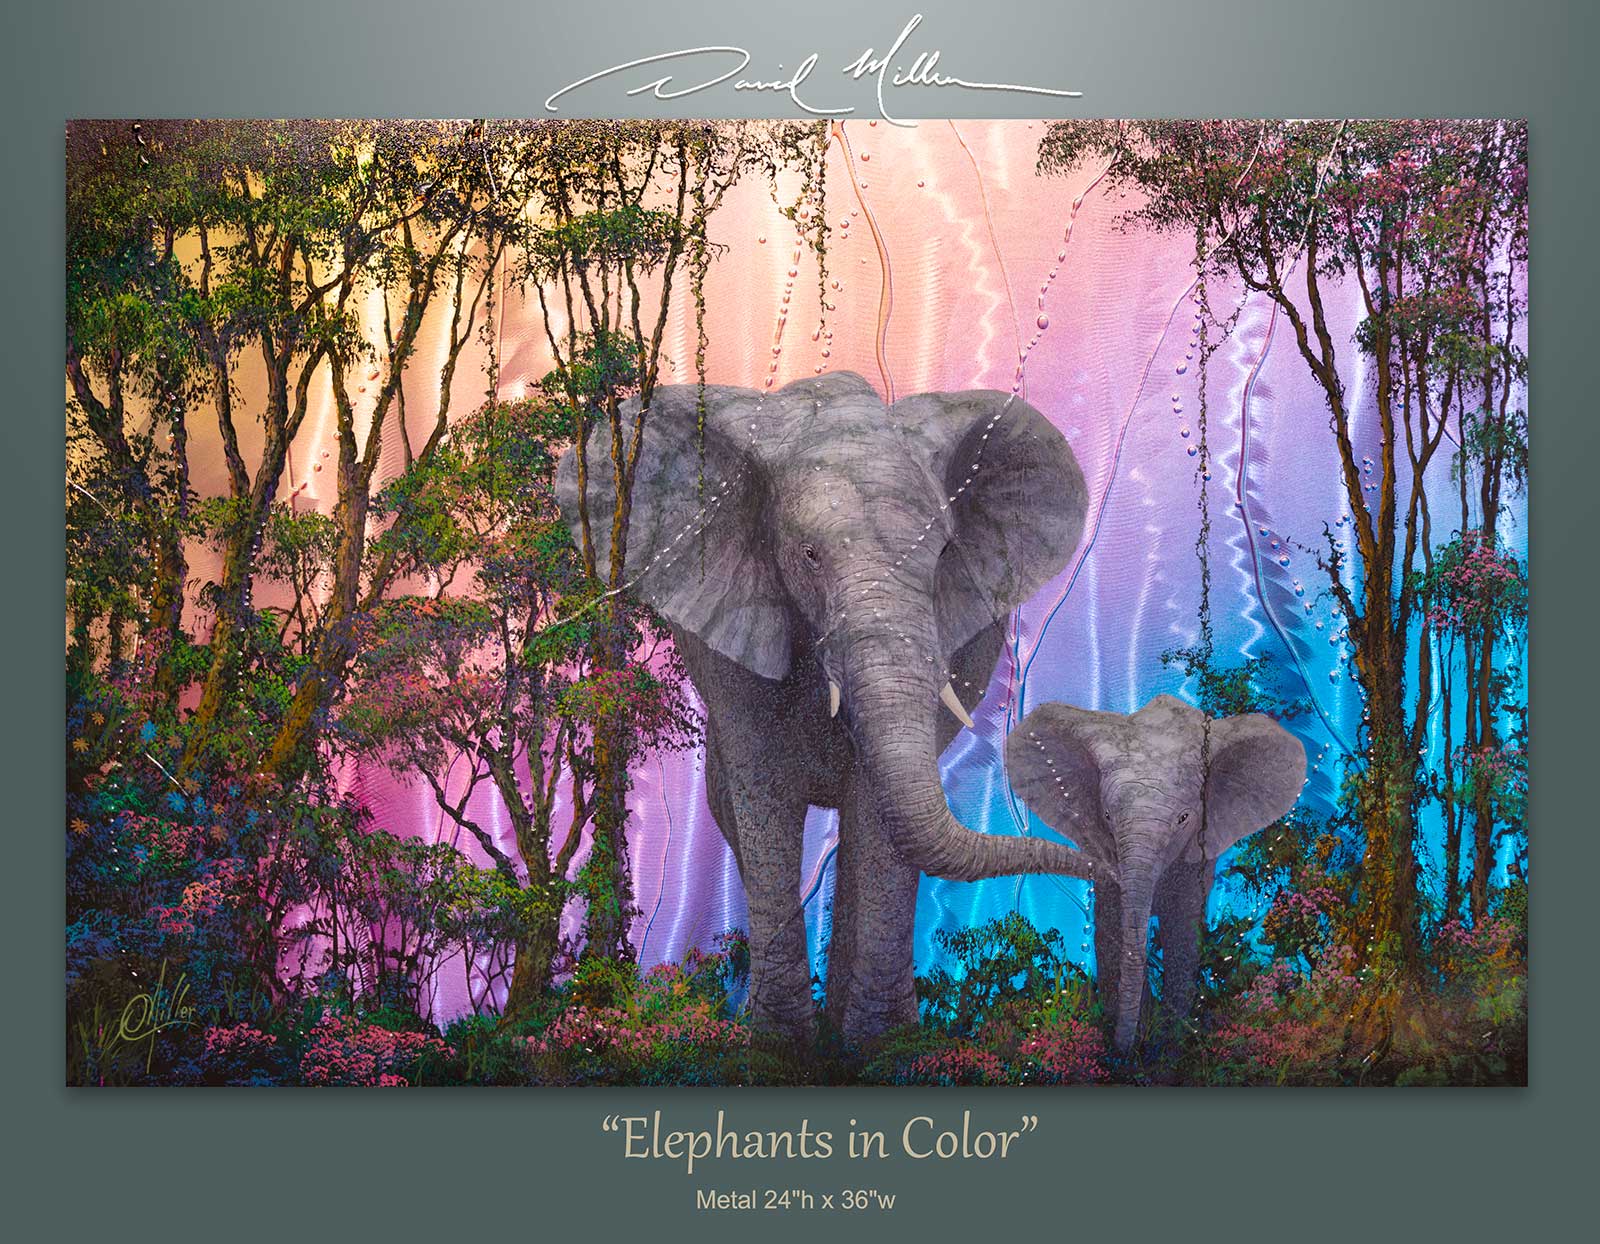 Painting of elephants